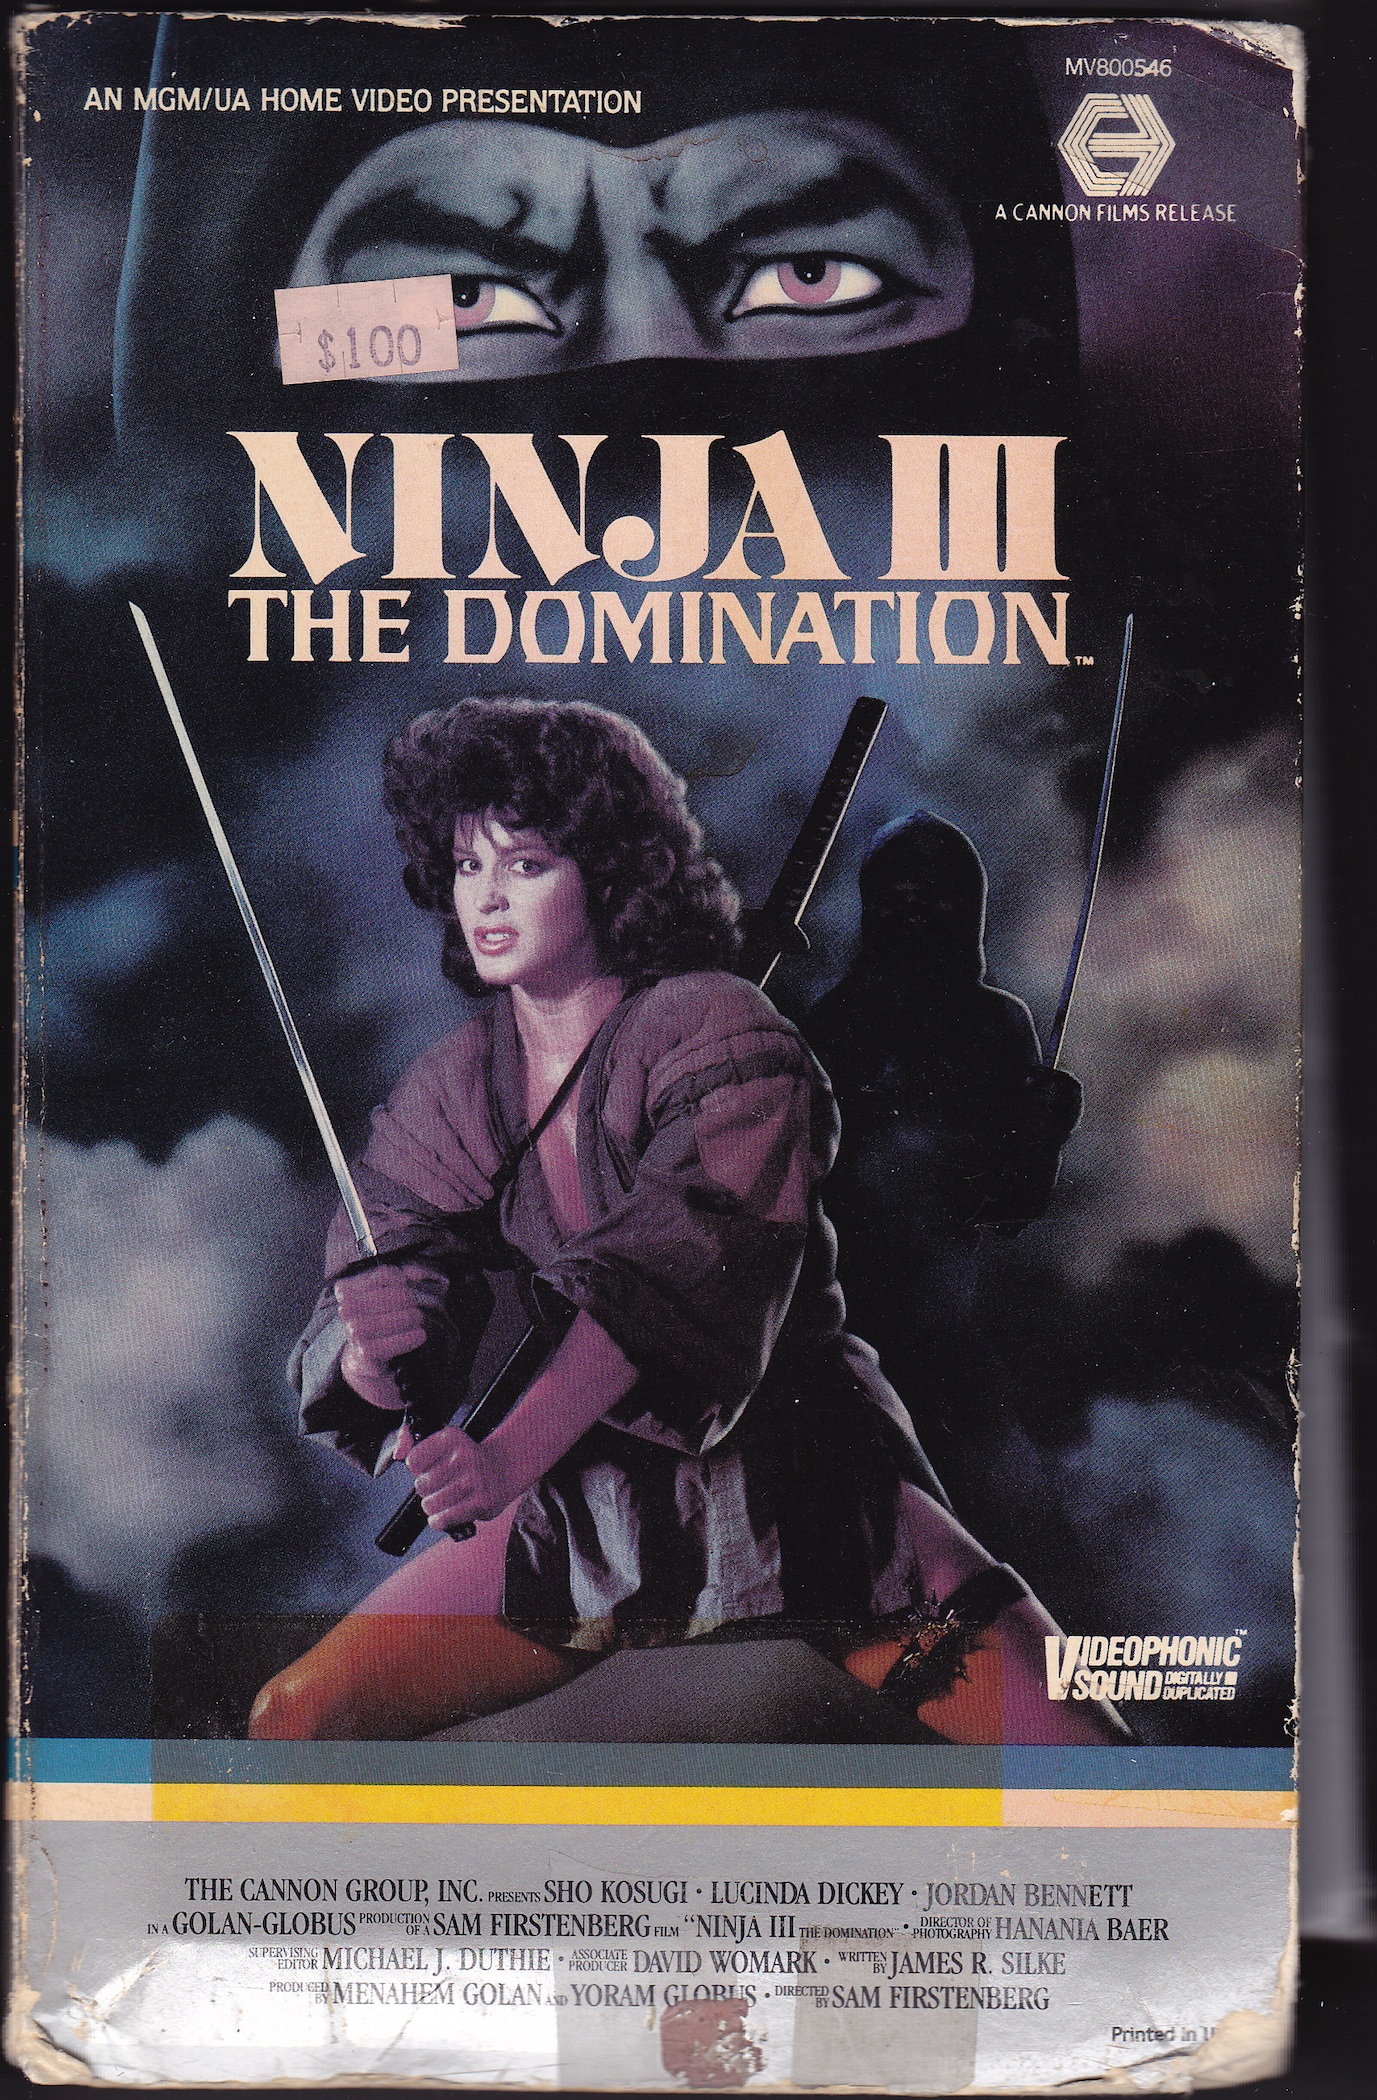 COLLECTING VHS: NINJA III: THE DOMINATION (1984)